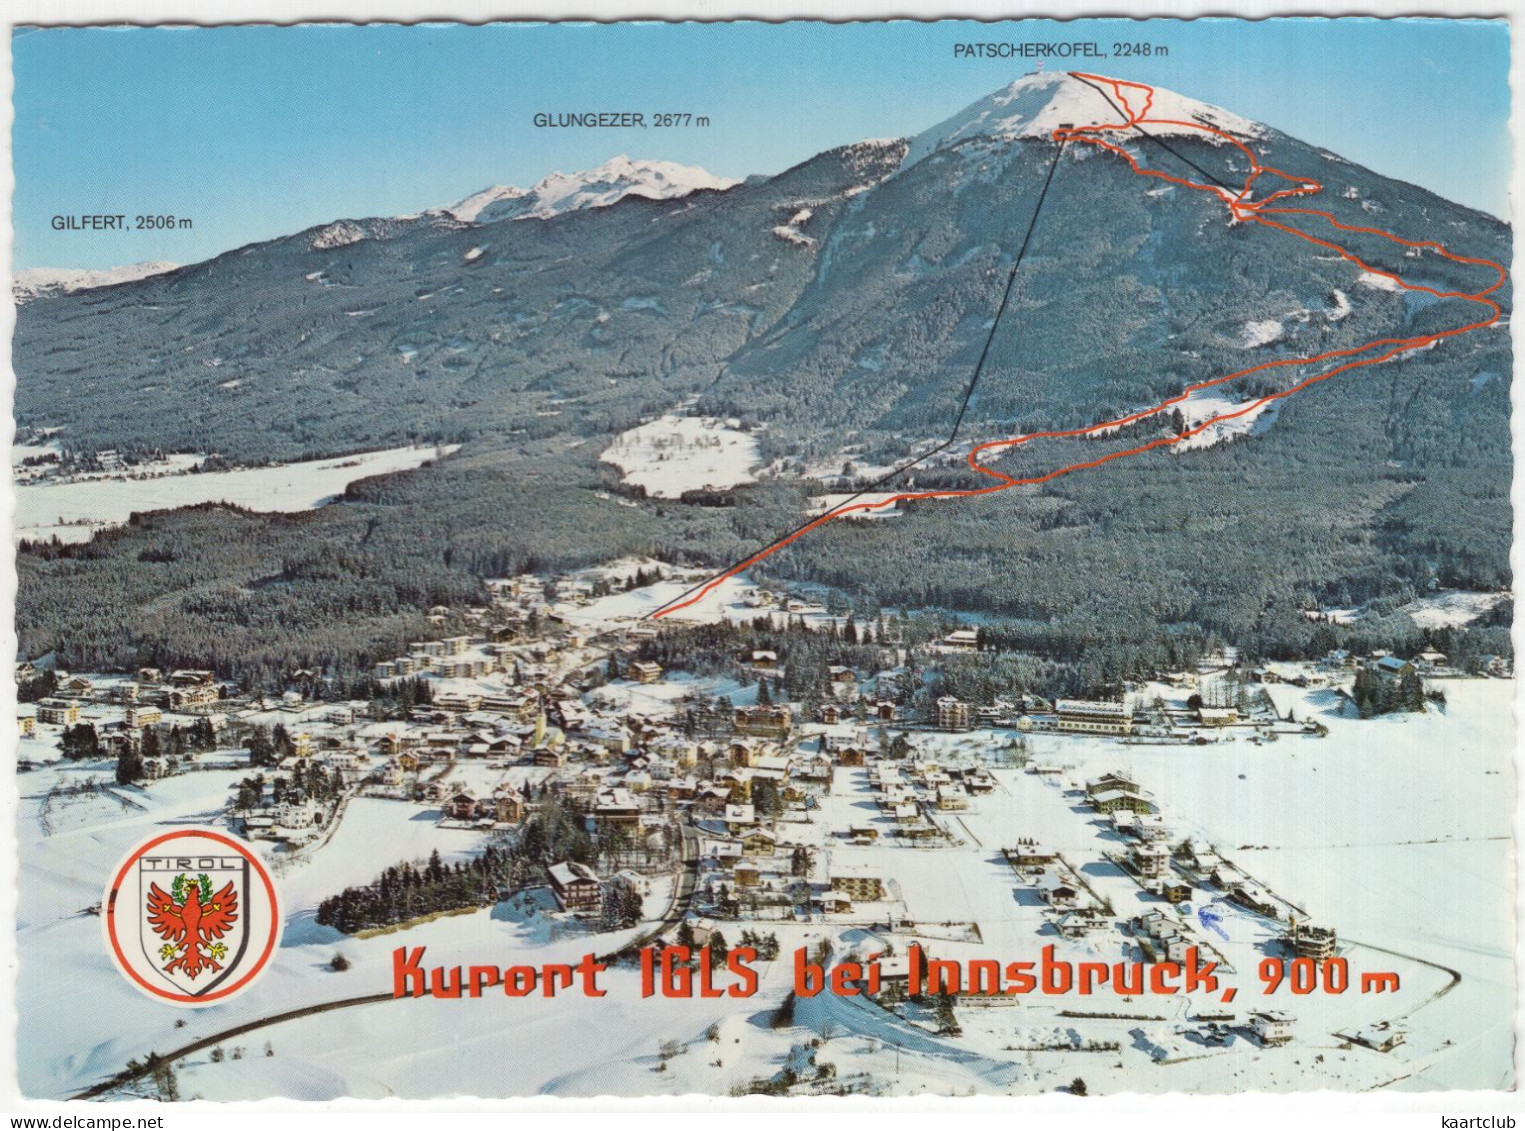 Kurort Igls Bei Innsbruck - Seilbahn Patscherkogel, Olymp. Abfahrtstrecke, Bobbahn - (Tirol, Österreich/Austria)  - 1973 - Igls